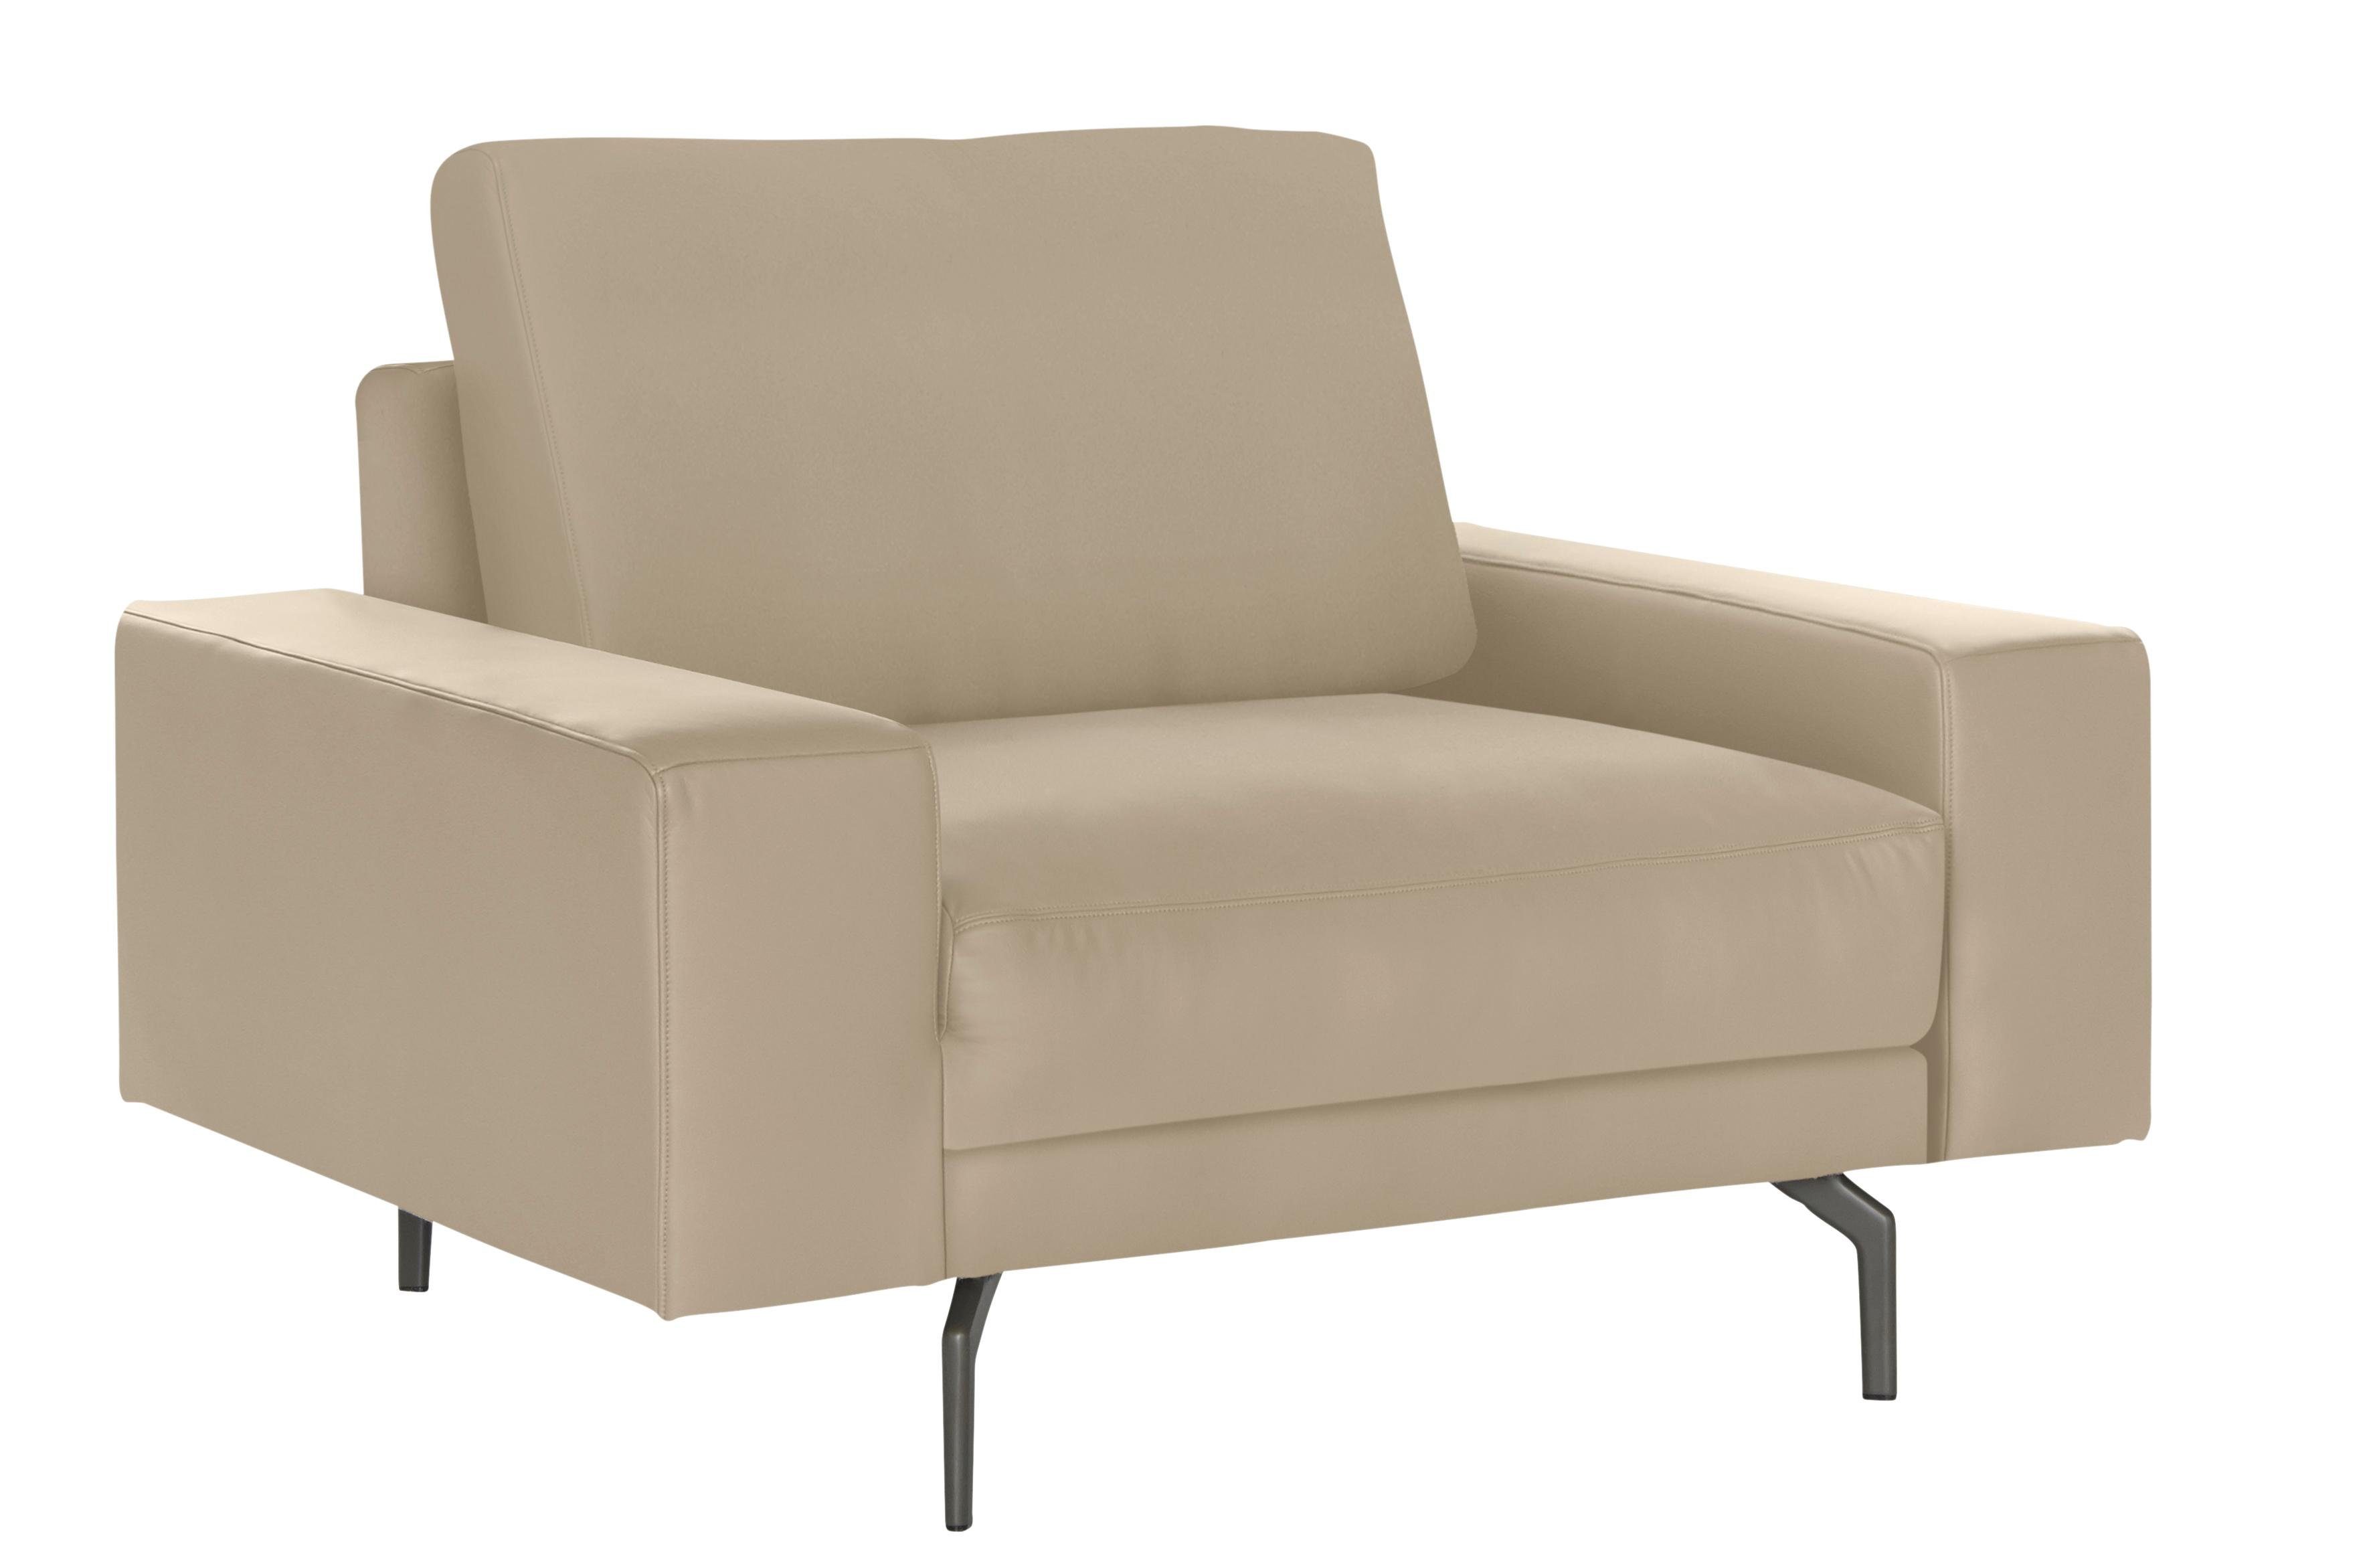 sofa hülsta umbragrau, Sessel hs.450, Armlehne Alugussfüße niedrig, cm Breite in breit 120